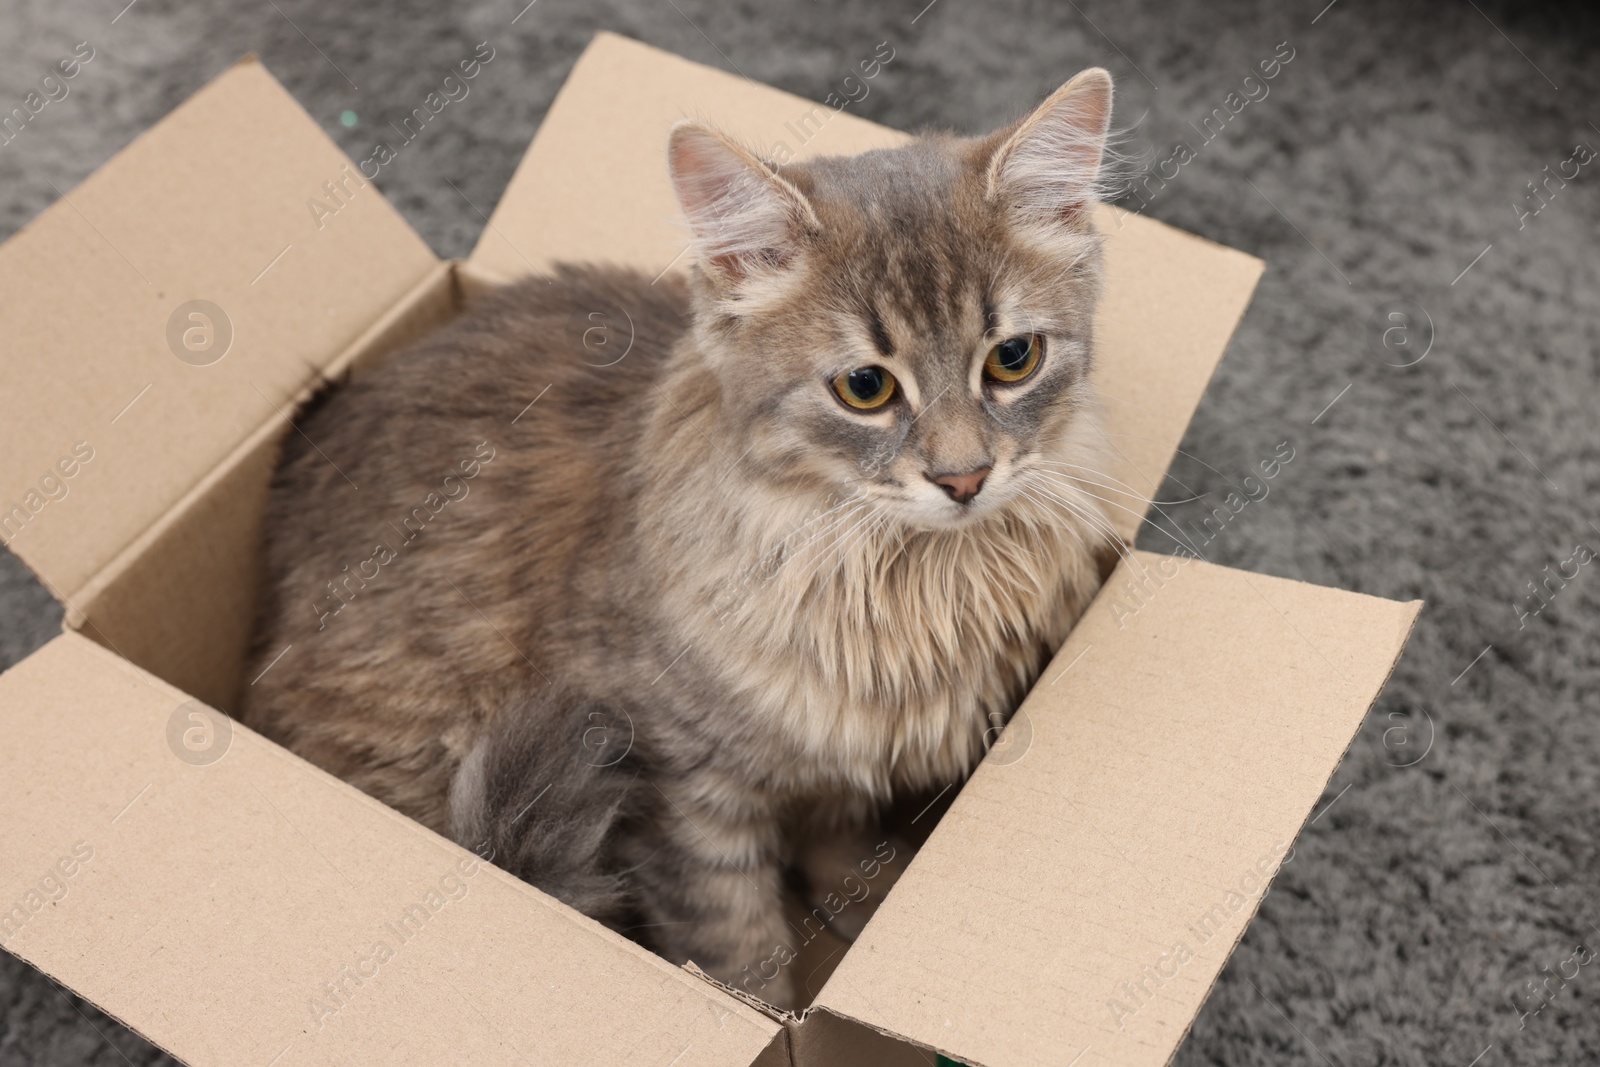 Photo of Cute fluffy cat in cardboard box on carpet